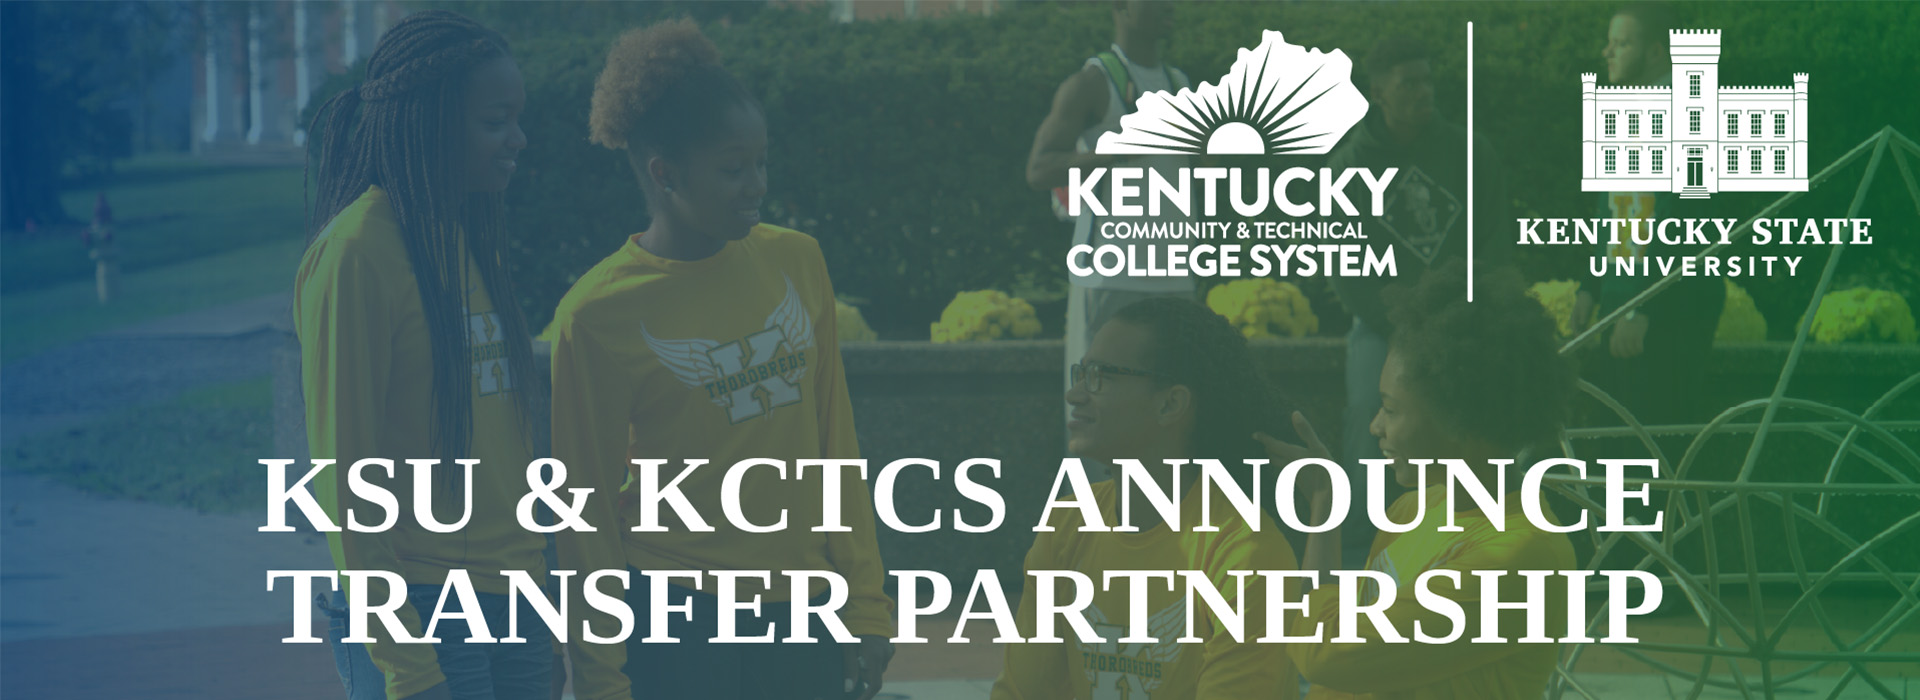 KSU KCTCS Transfer Partnership